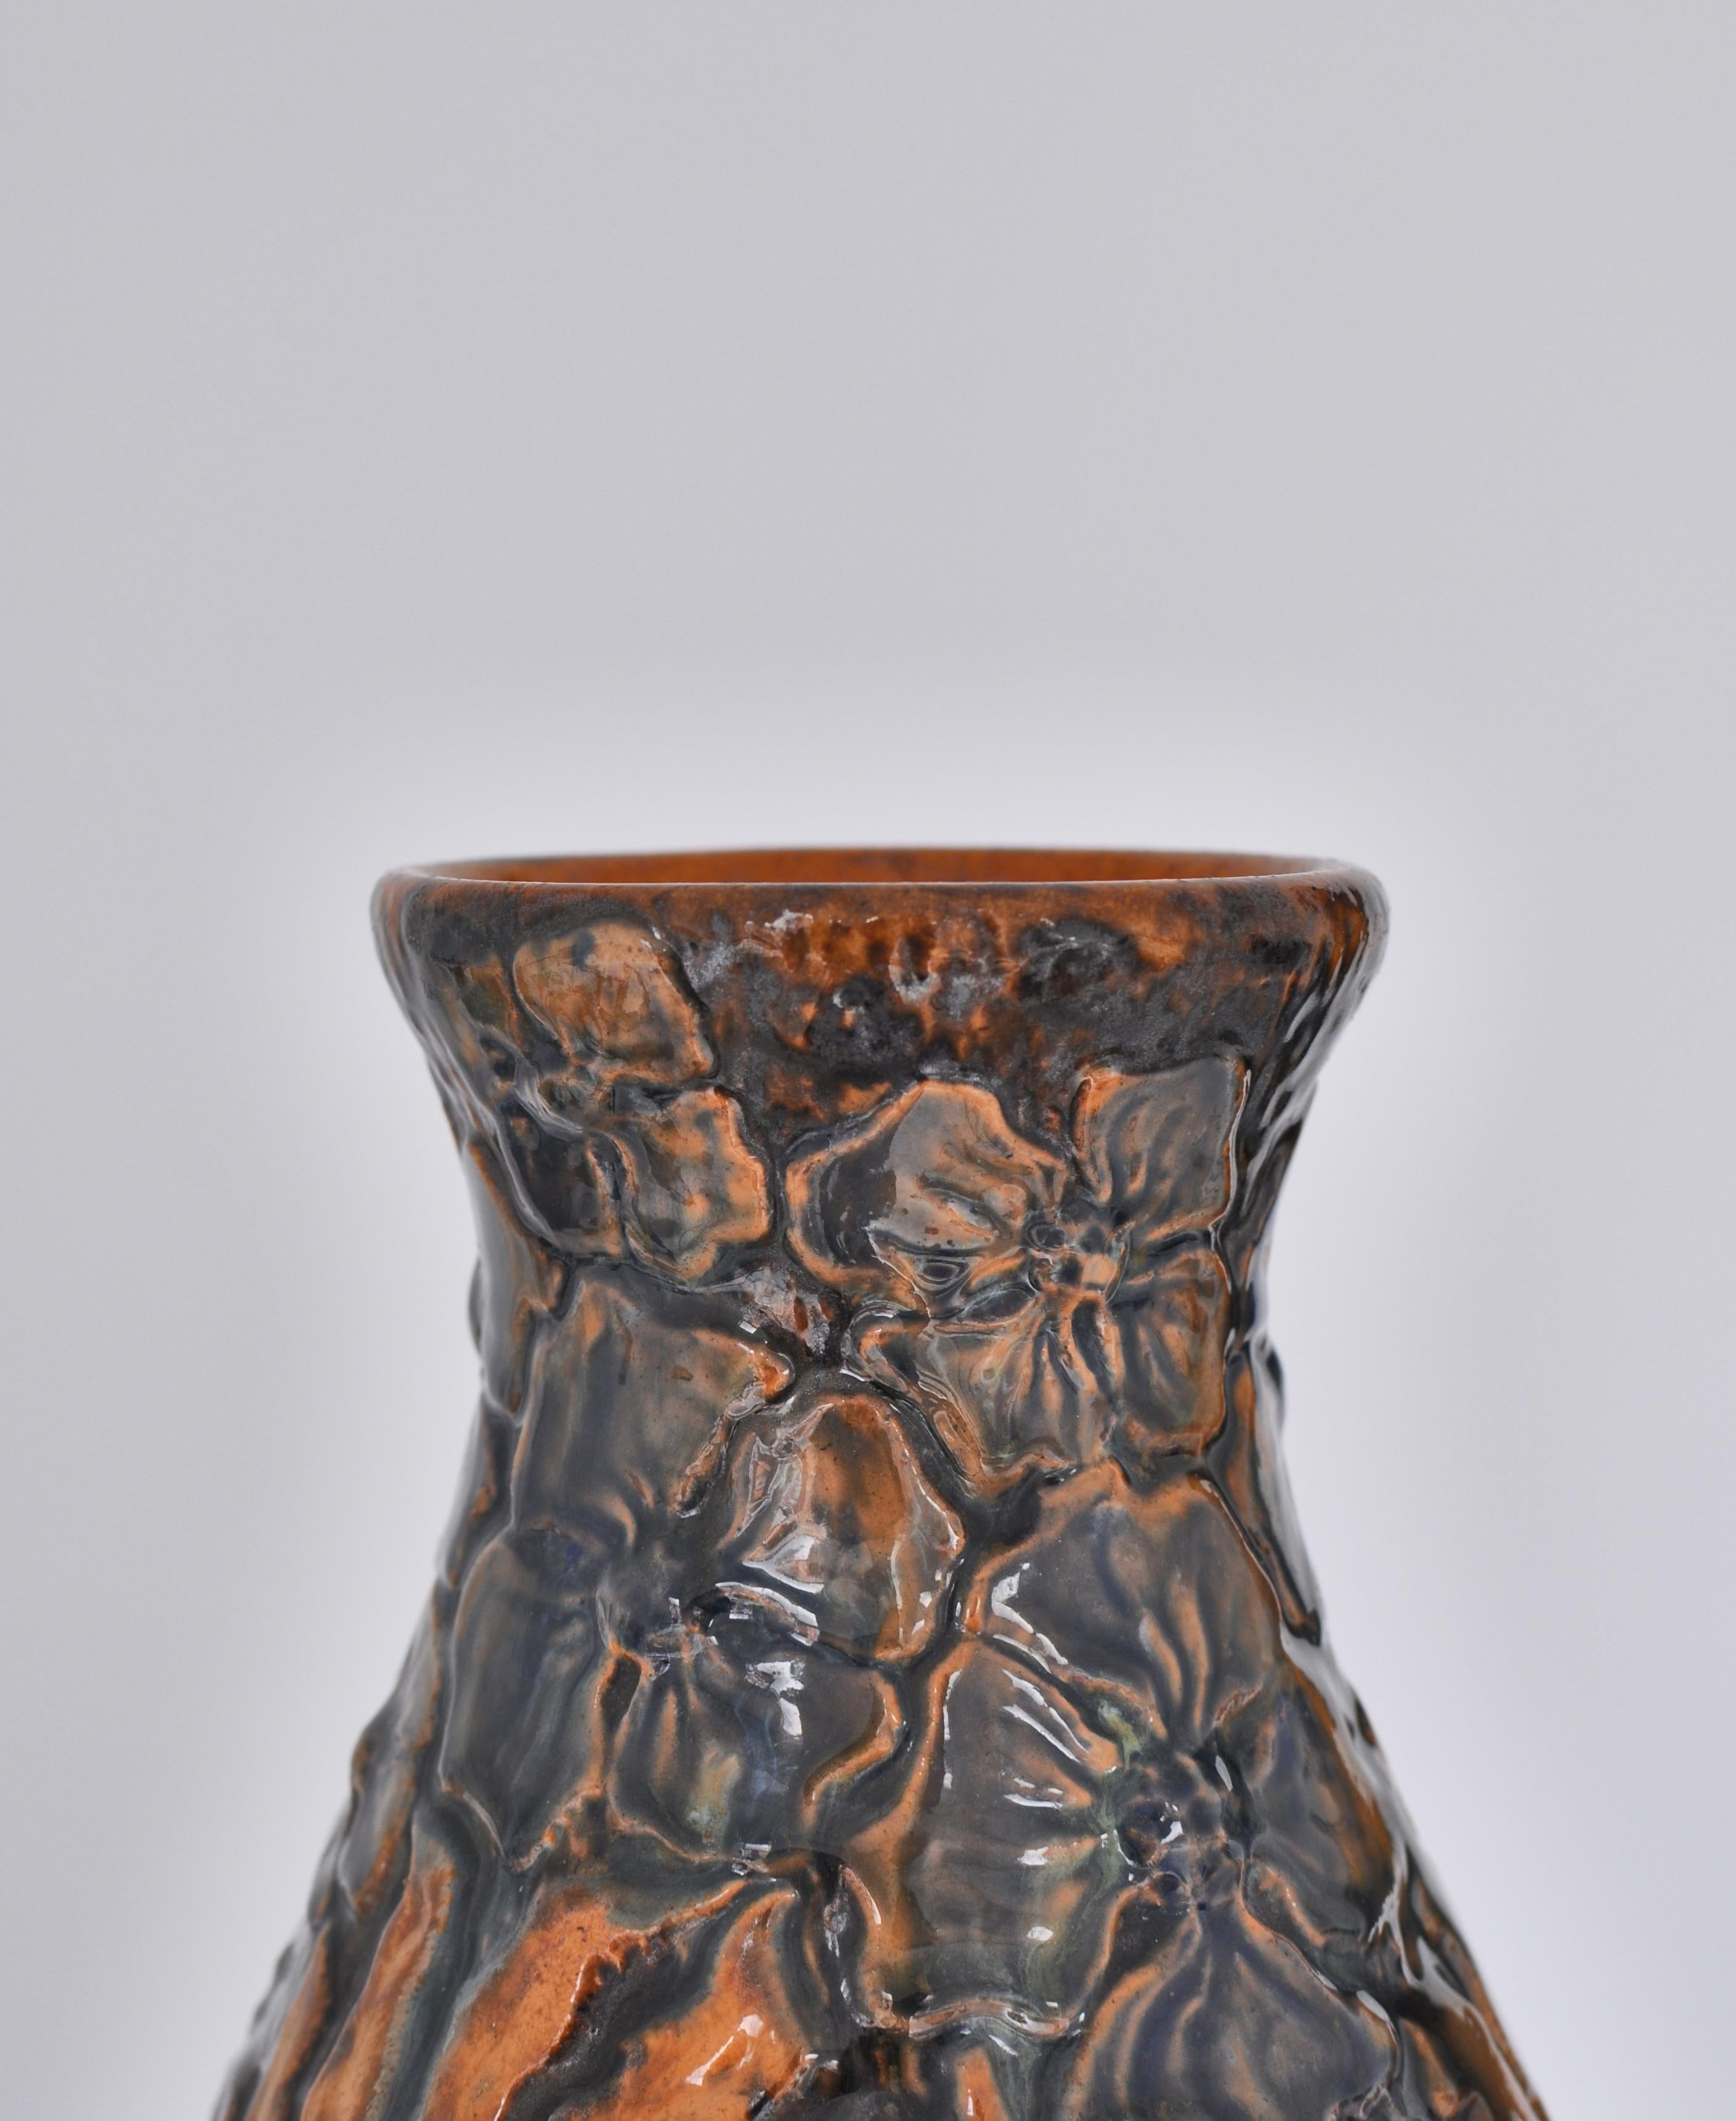 Danish Large Art Nouveau / Jugend Style 1920s Ceramics Vase by MA & Sons, Denmark